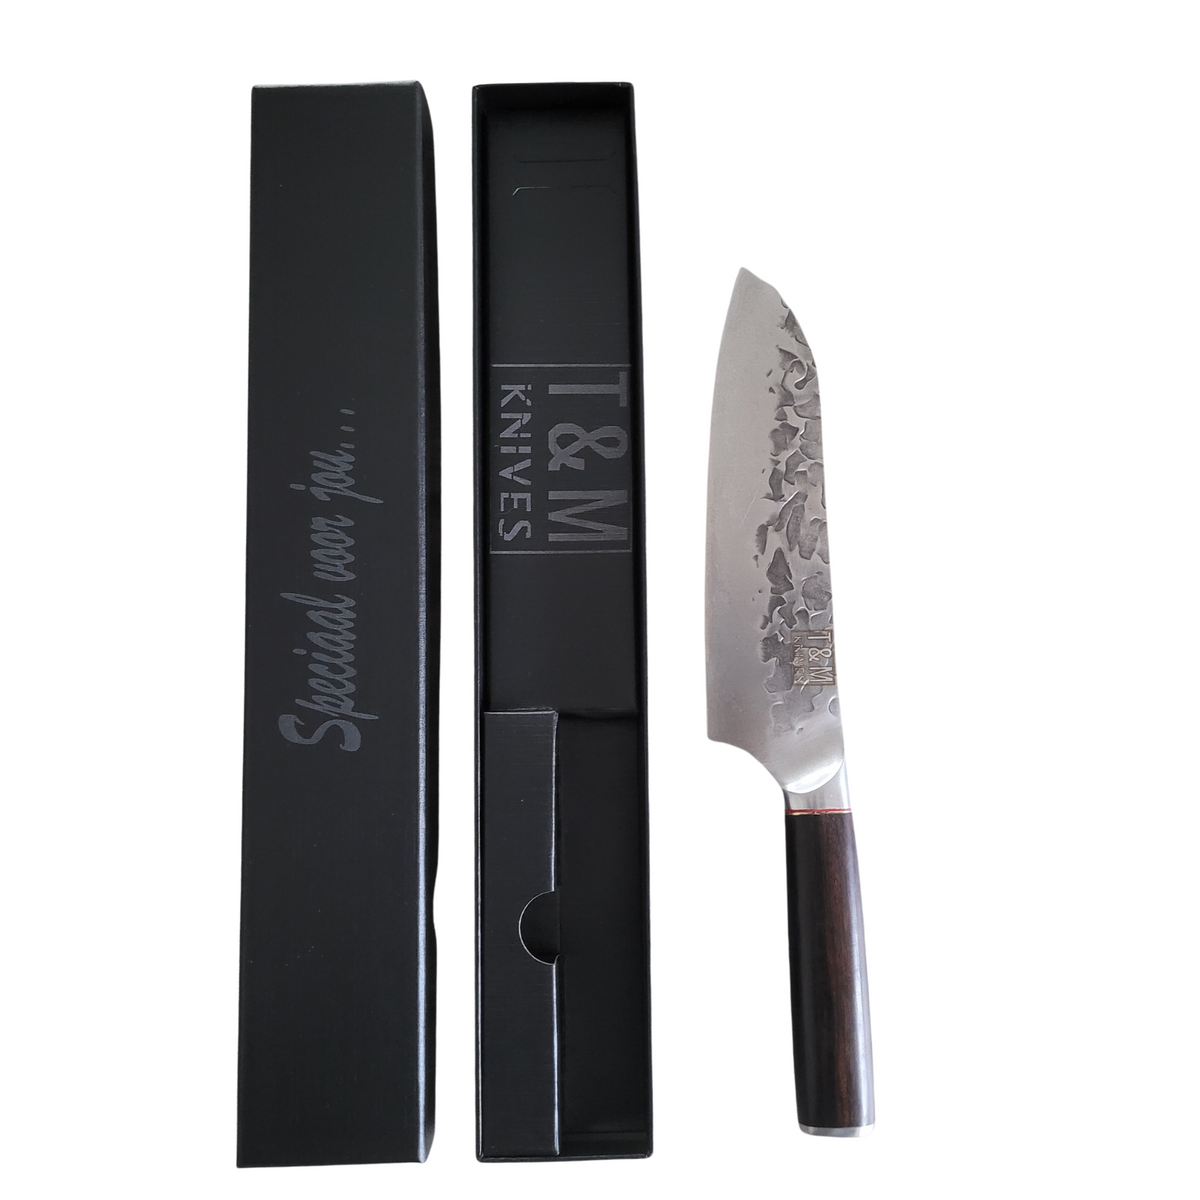 T&M Knives® -  Japans Koksmes Bodils - Keukenmes Van Keihard Staal